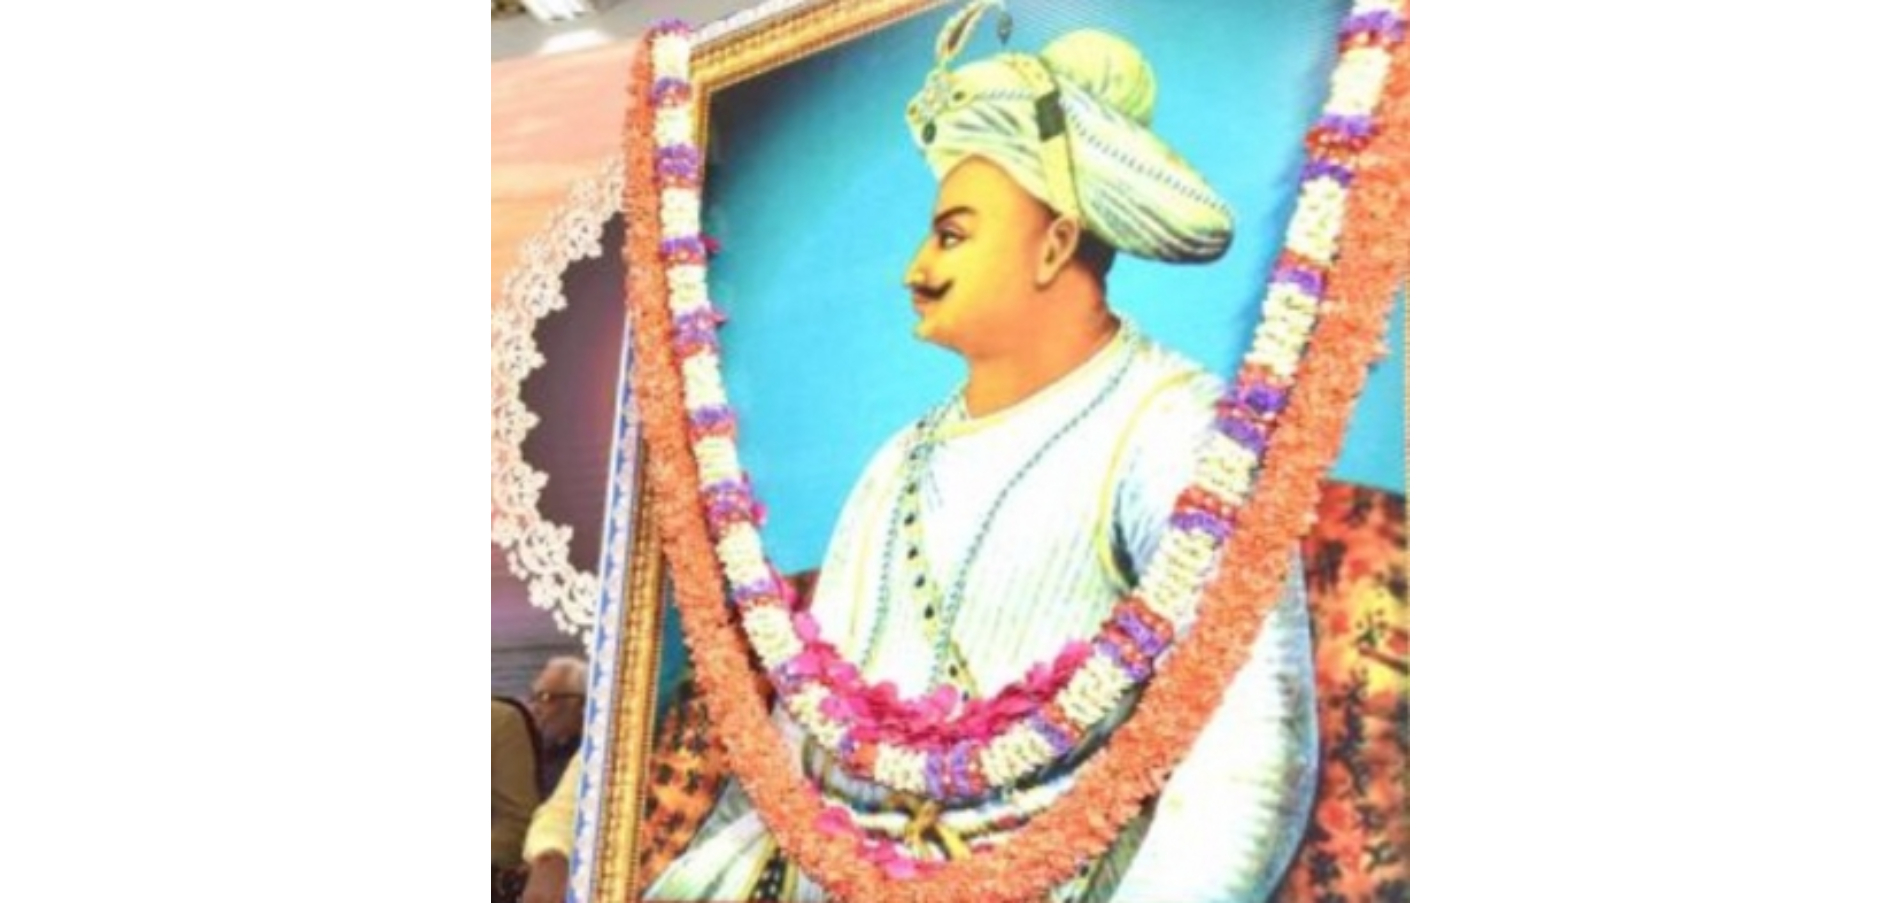 Tipu Sultan: ٹیپو سلطان کے ذریعہ شروع کی گئی رسم ‘سلام آرتی’ کا نام تبدیل کرے گی کرناٹک بی جے پی